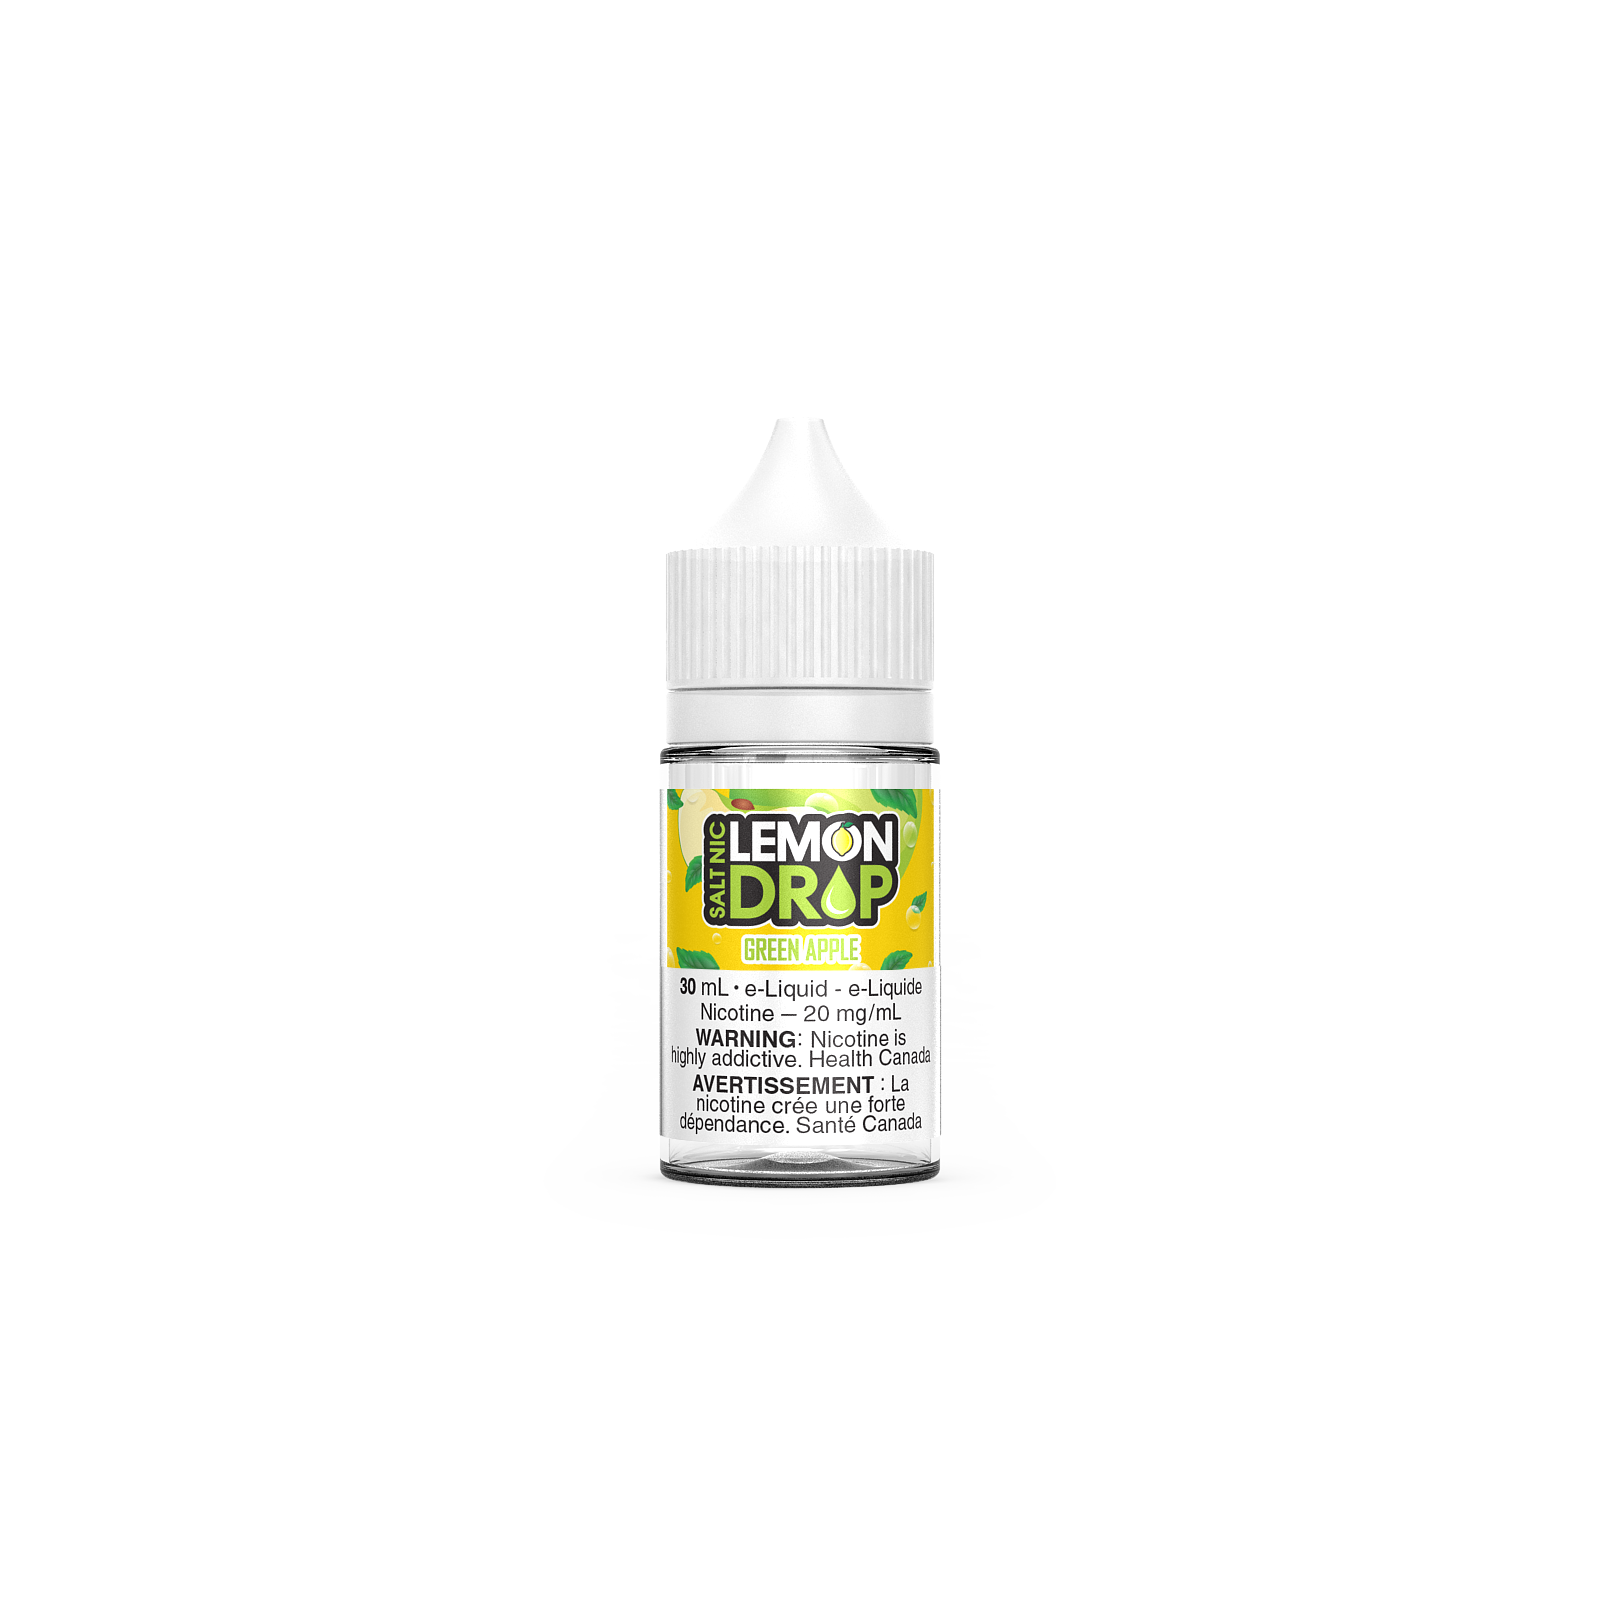 Lemon Drop - SALT - Green Apple - E-Liquid